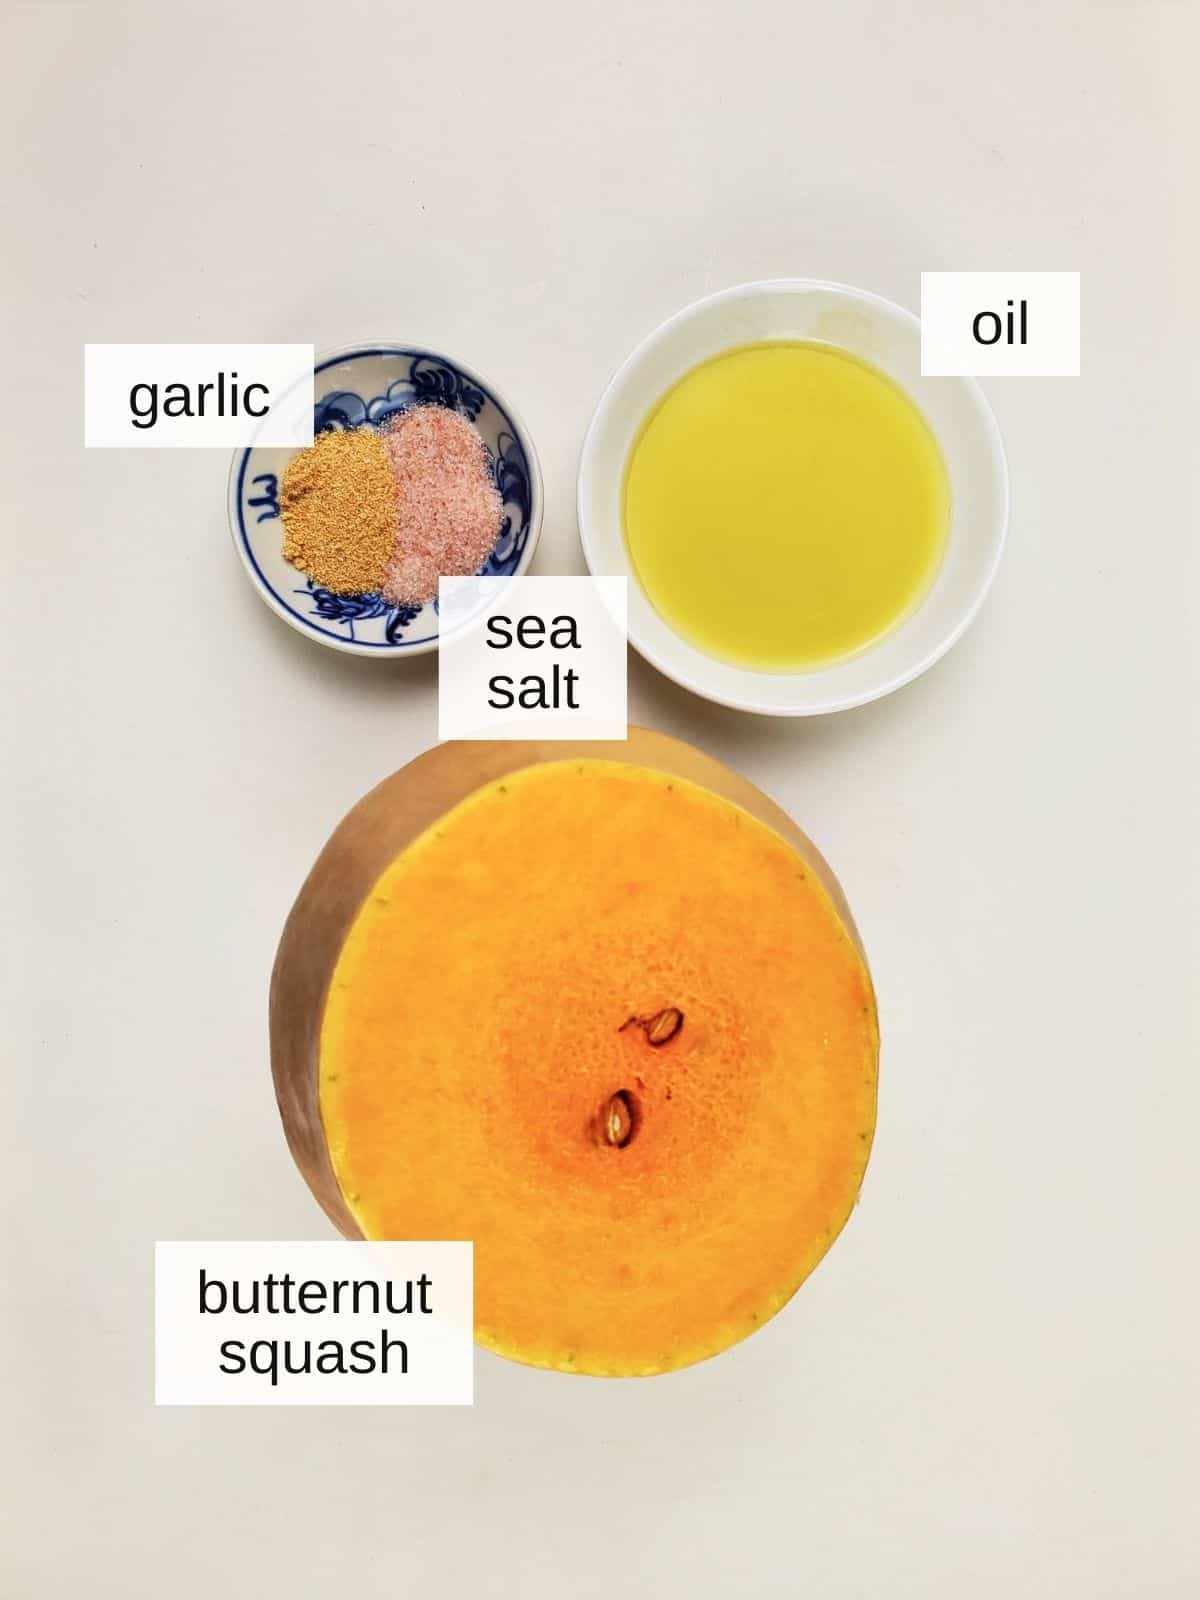 ingredients for savory sautéed butternut squash, including garlic powder, sea salt, oil, and butternut squash.